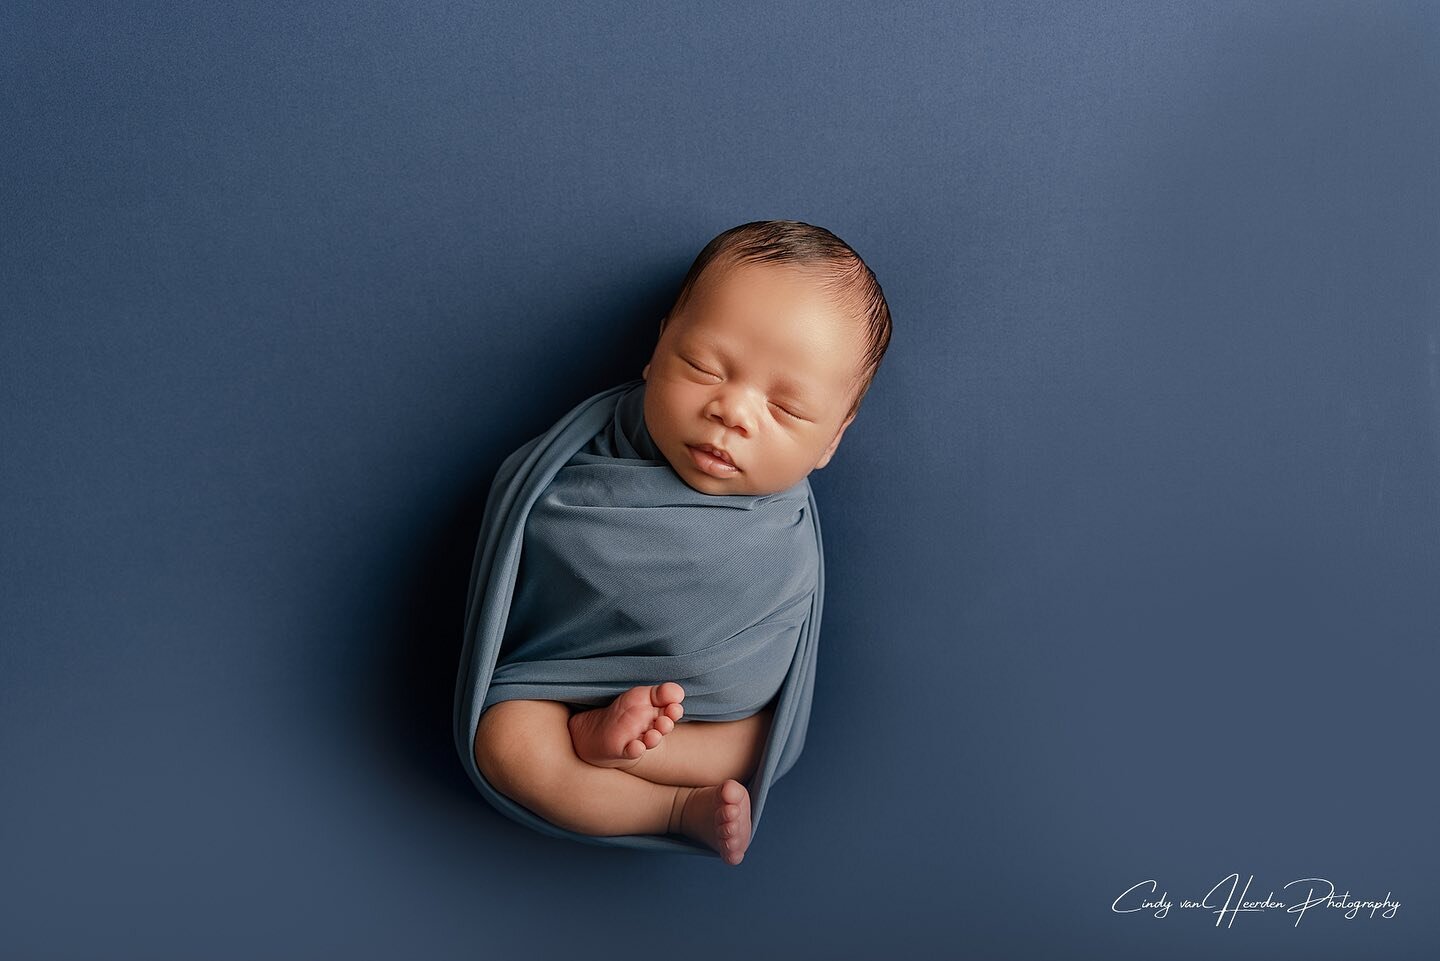 Aaron 💙

#capetownbabies #newbornphotography